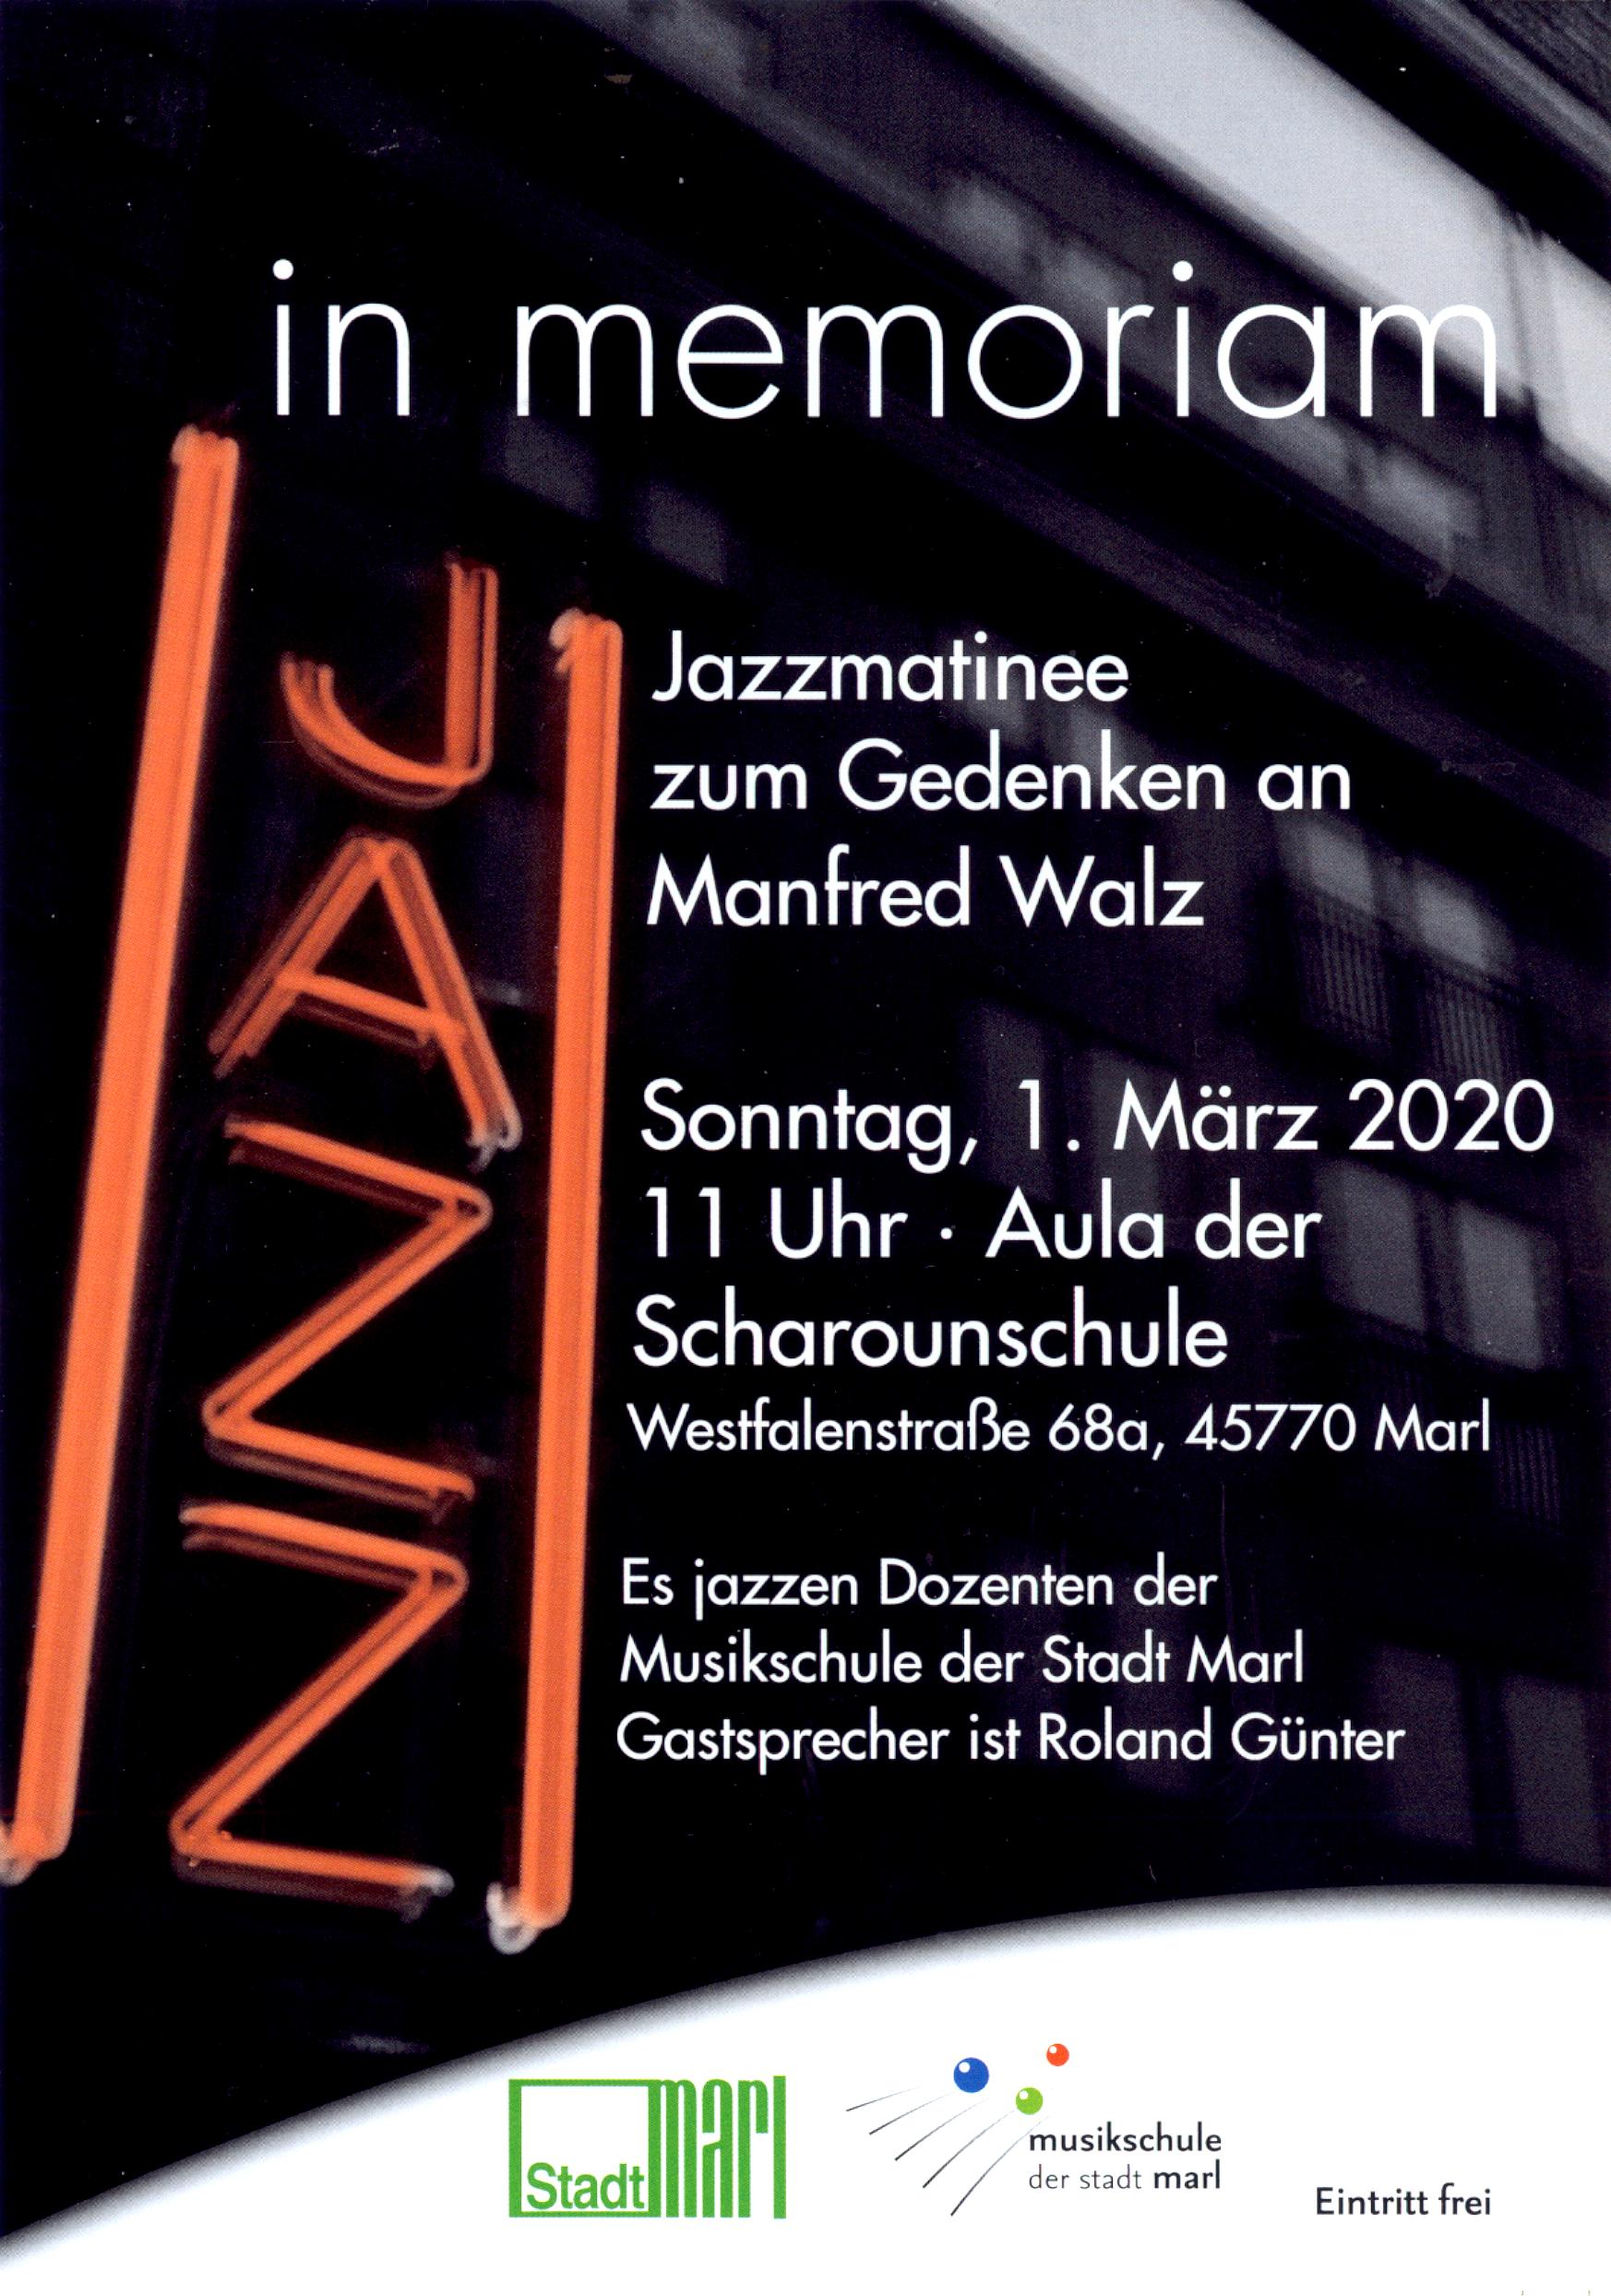 in memoriam Jazzmatinee Manfred Walz aktuelles.jpg